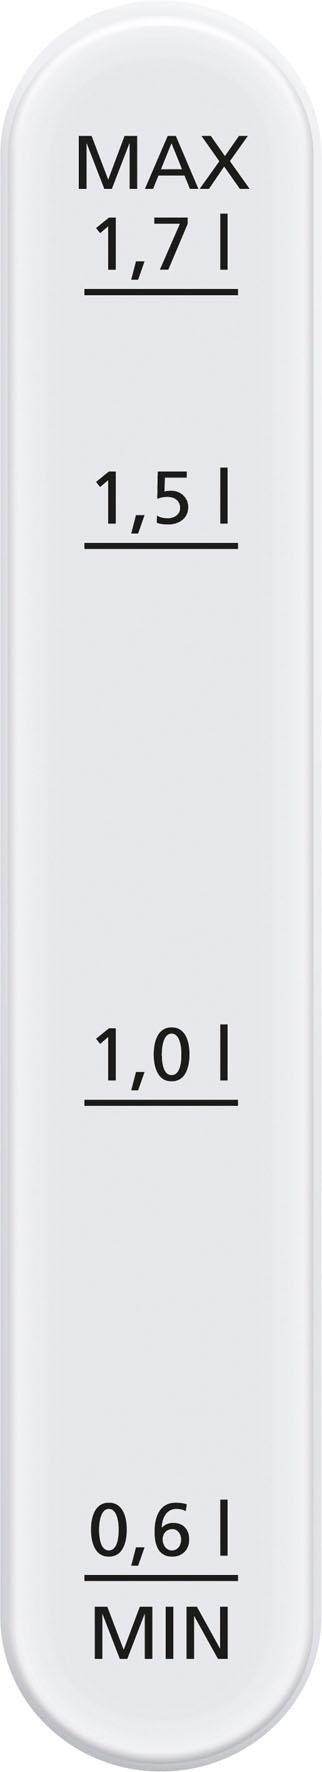 Steba Wasserkocher »WK 10 Bianco«, 1,7 l, 2200 W